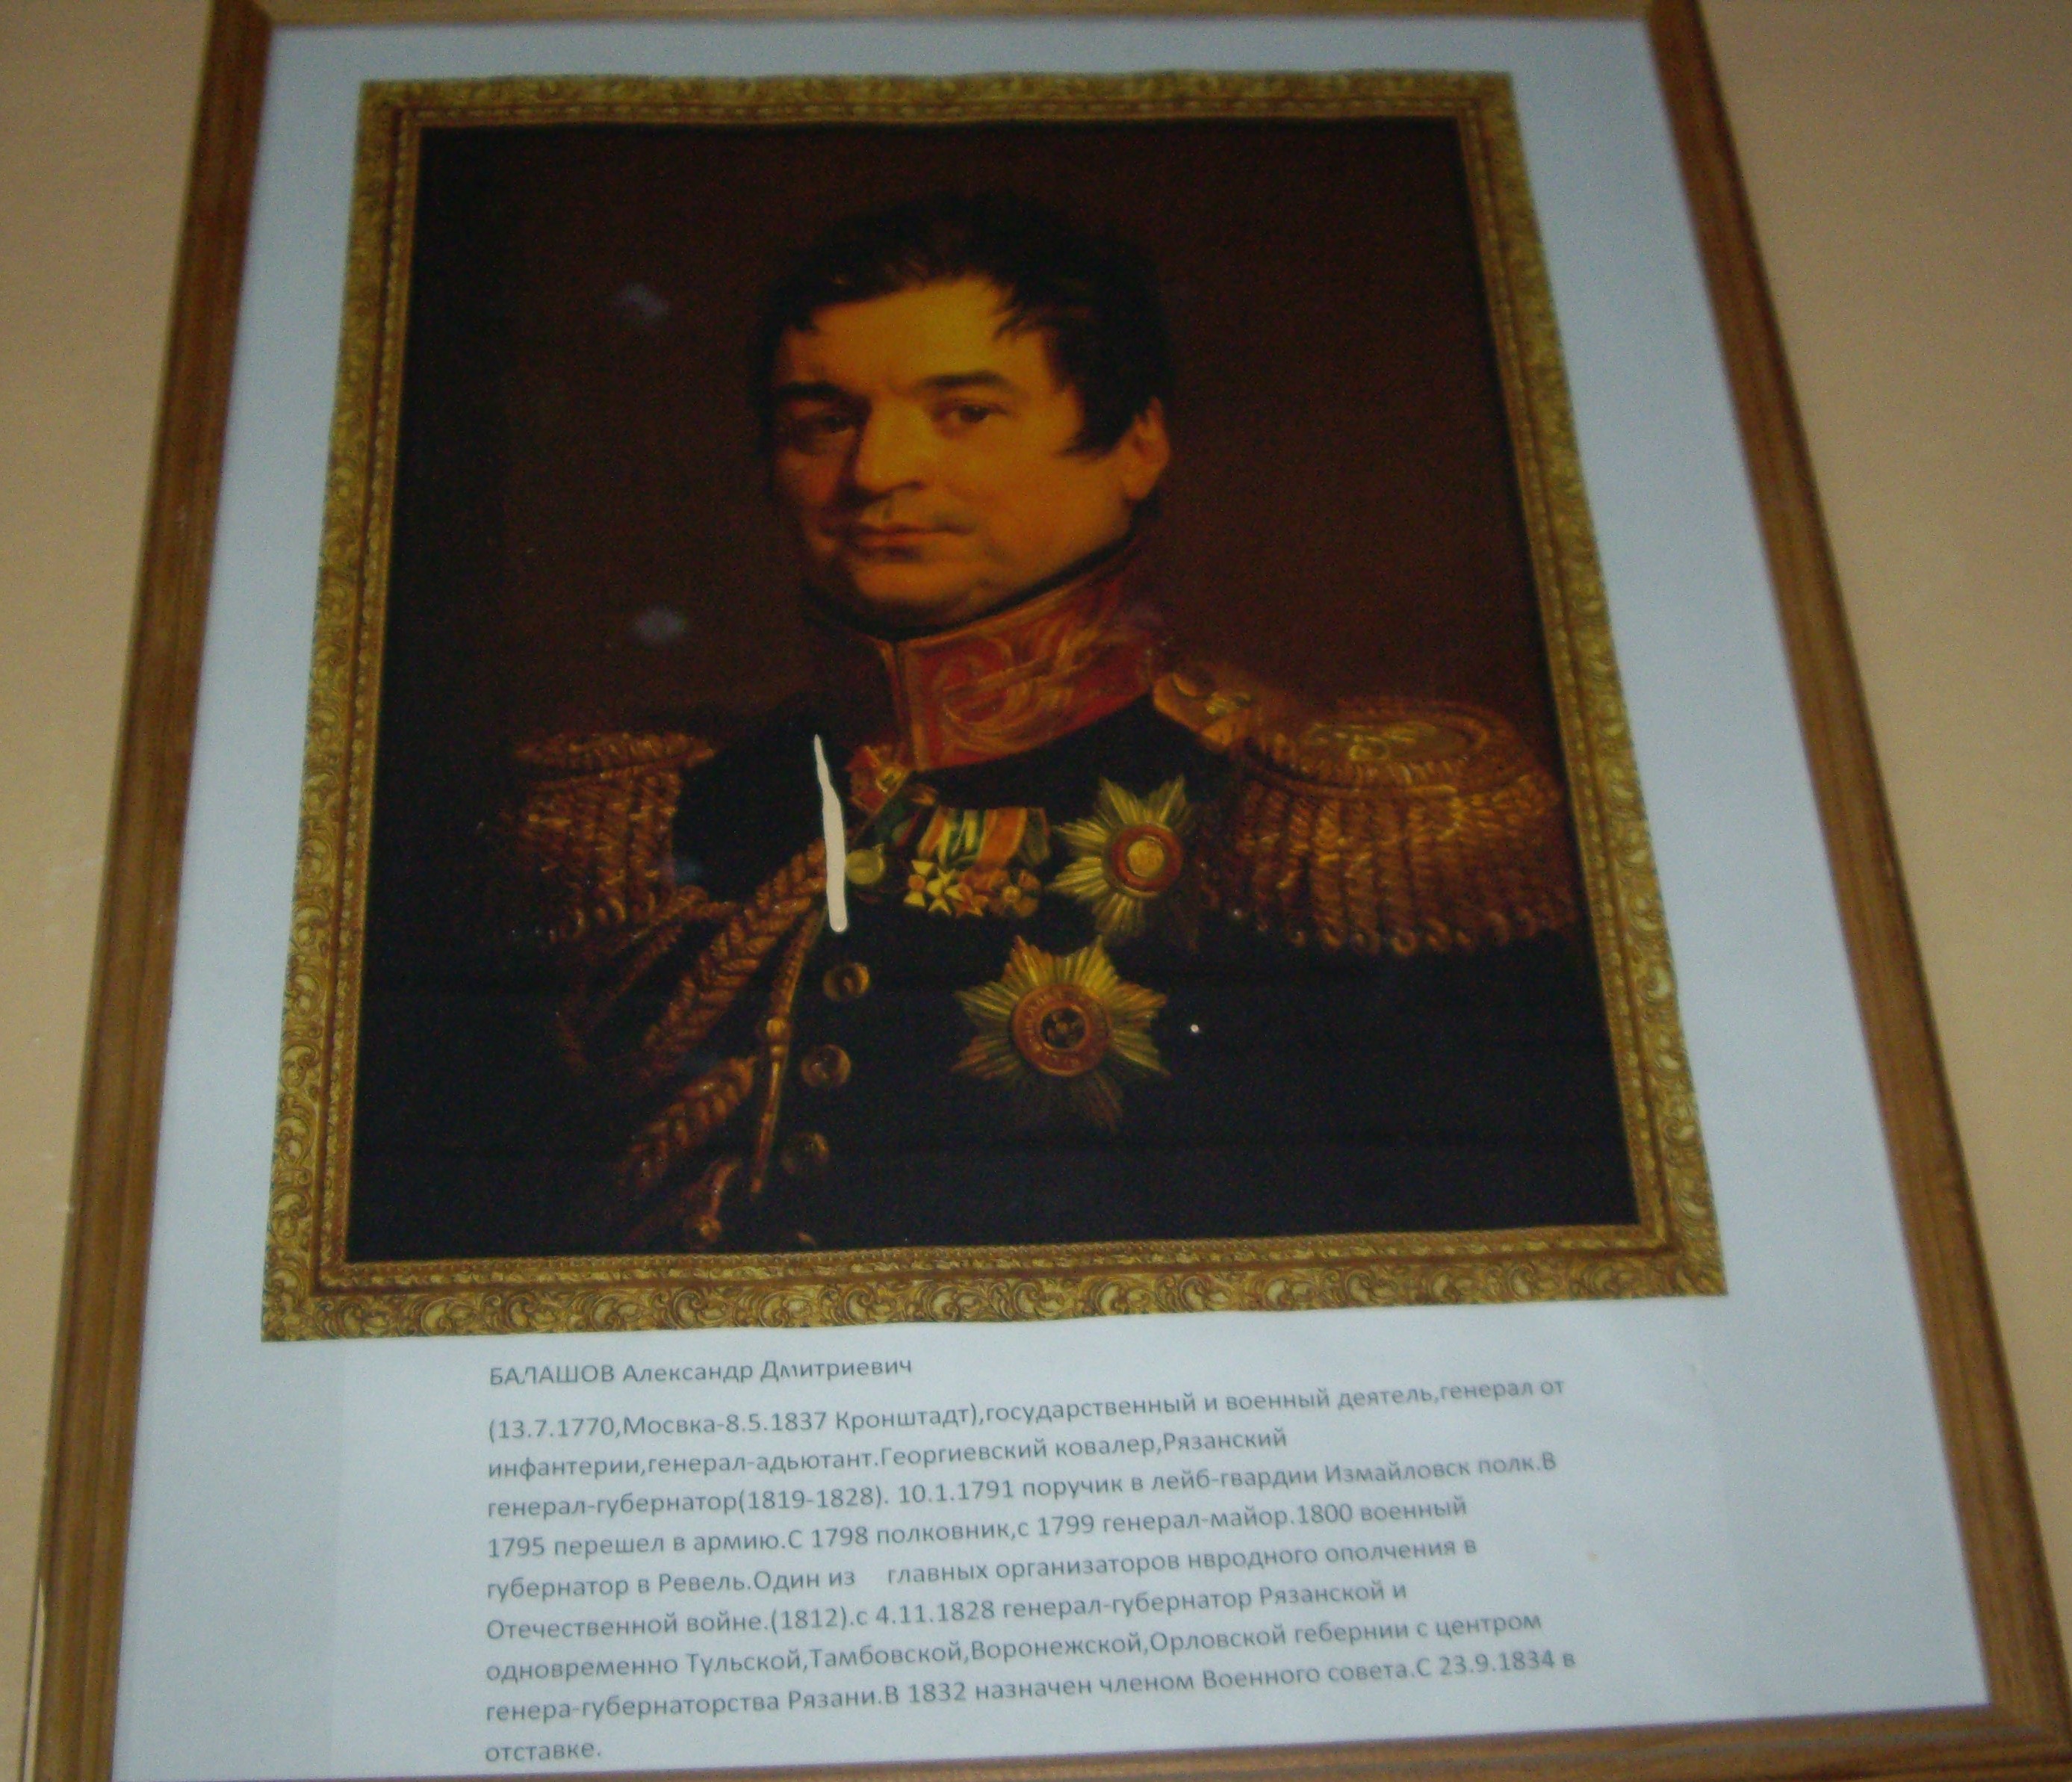 Балашов Александр Дмитриевич (1770-1837)